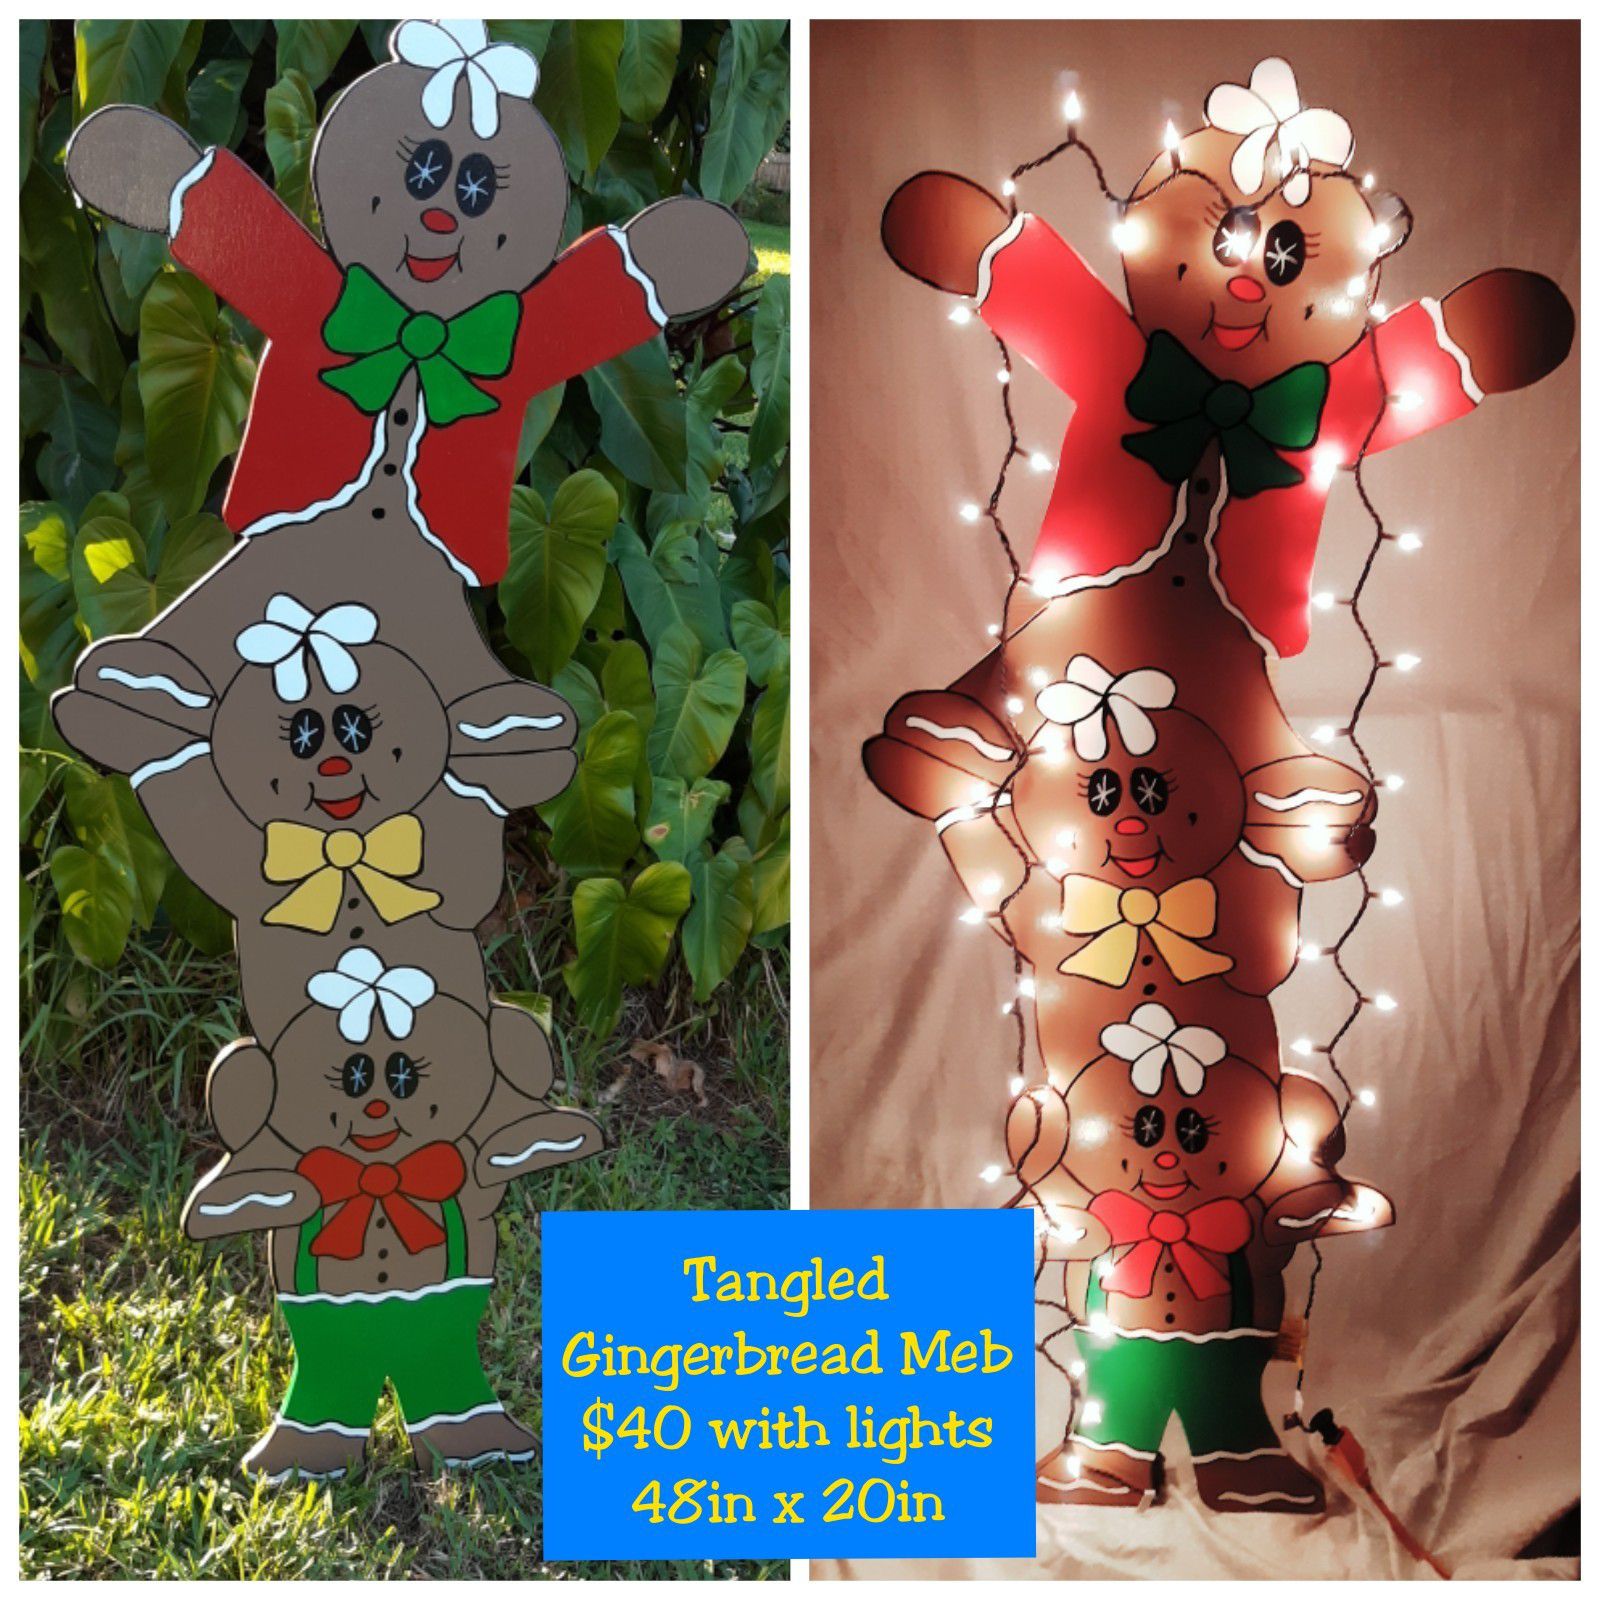 Tangled Gingerbread Men